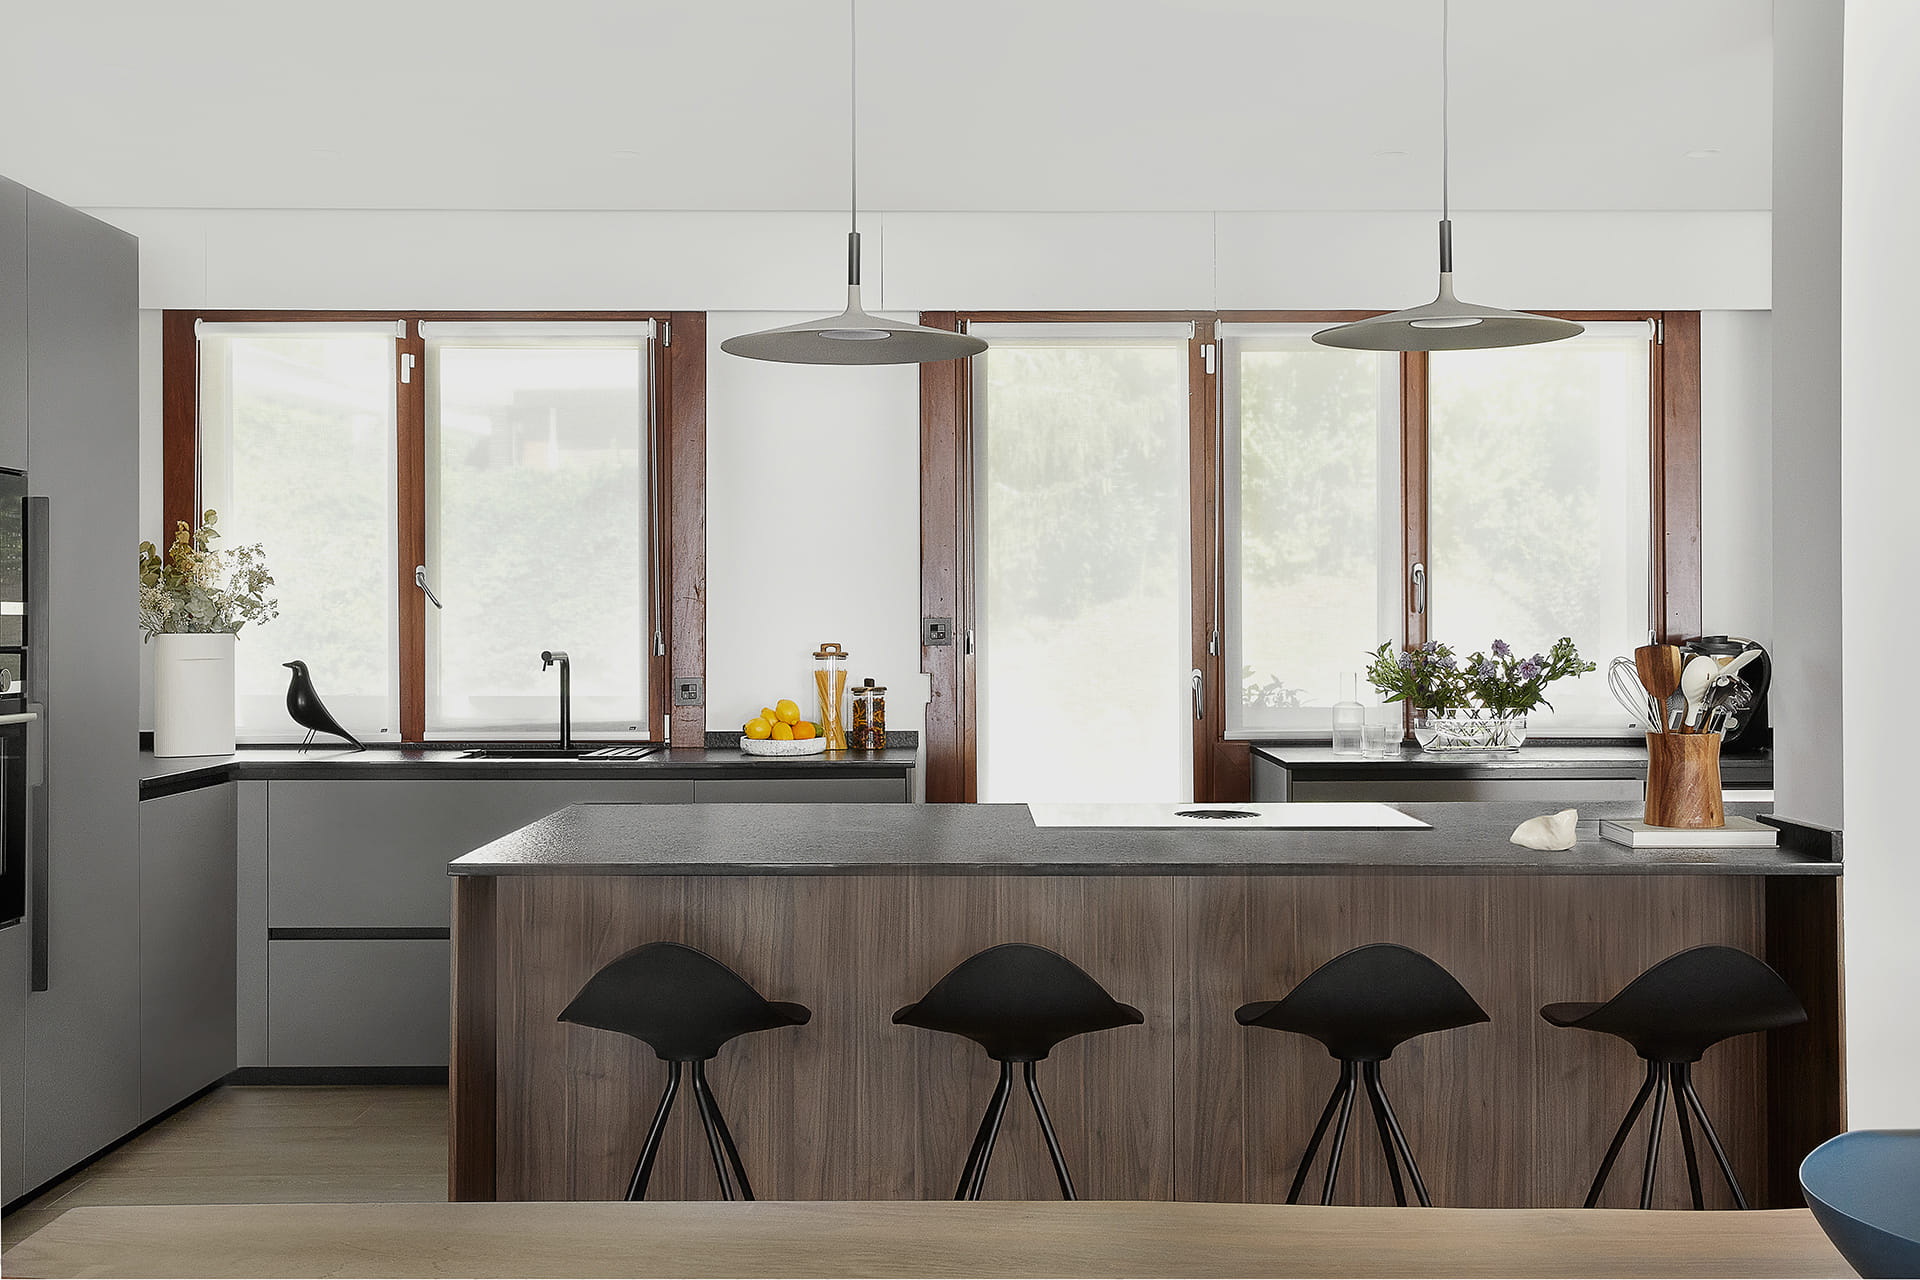 Mink grey Santos kitchen with centre island and design in wood.